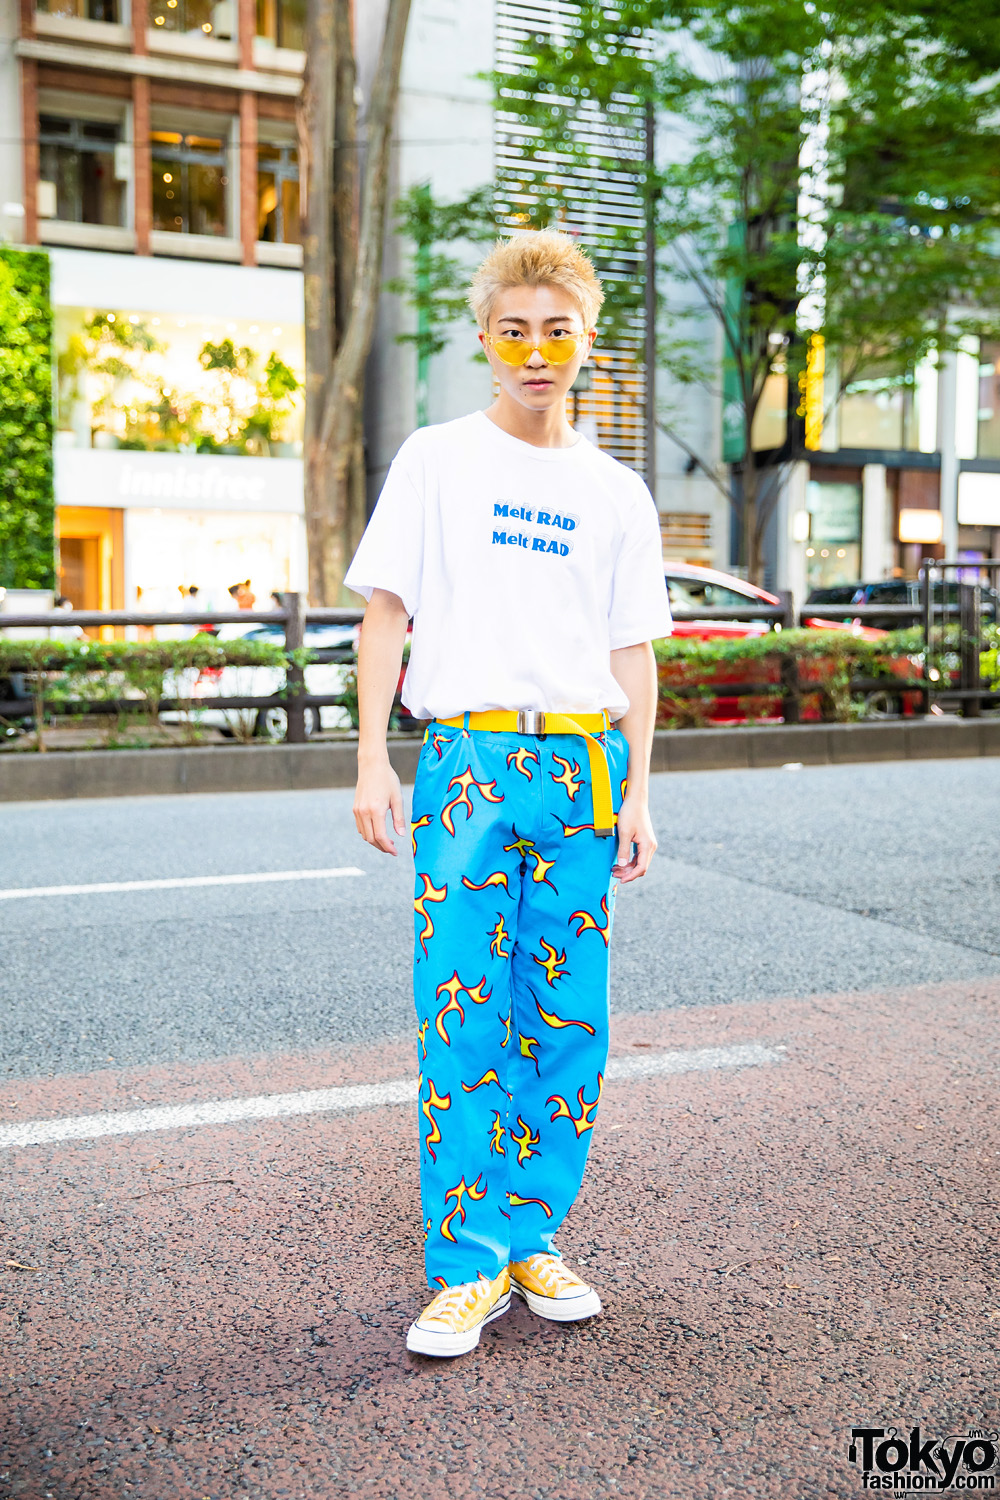 Harajuku Guy in Casual Street Style White Printed RAD Shirt, Golf Wang Flame Pants, Yellow Belt & Converse Sneakers – Tokyo